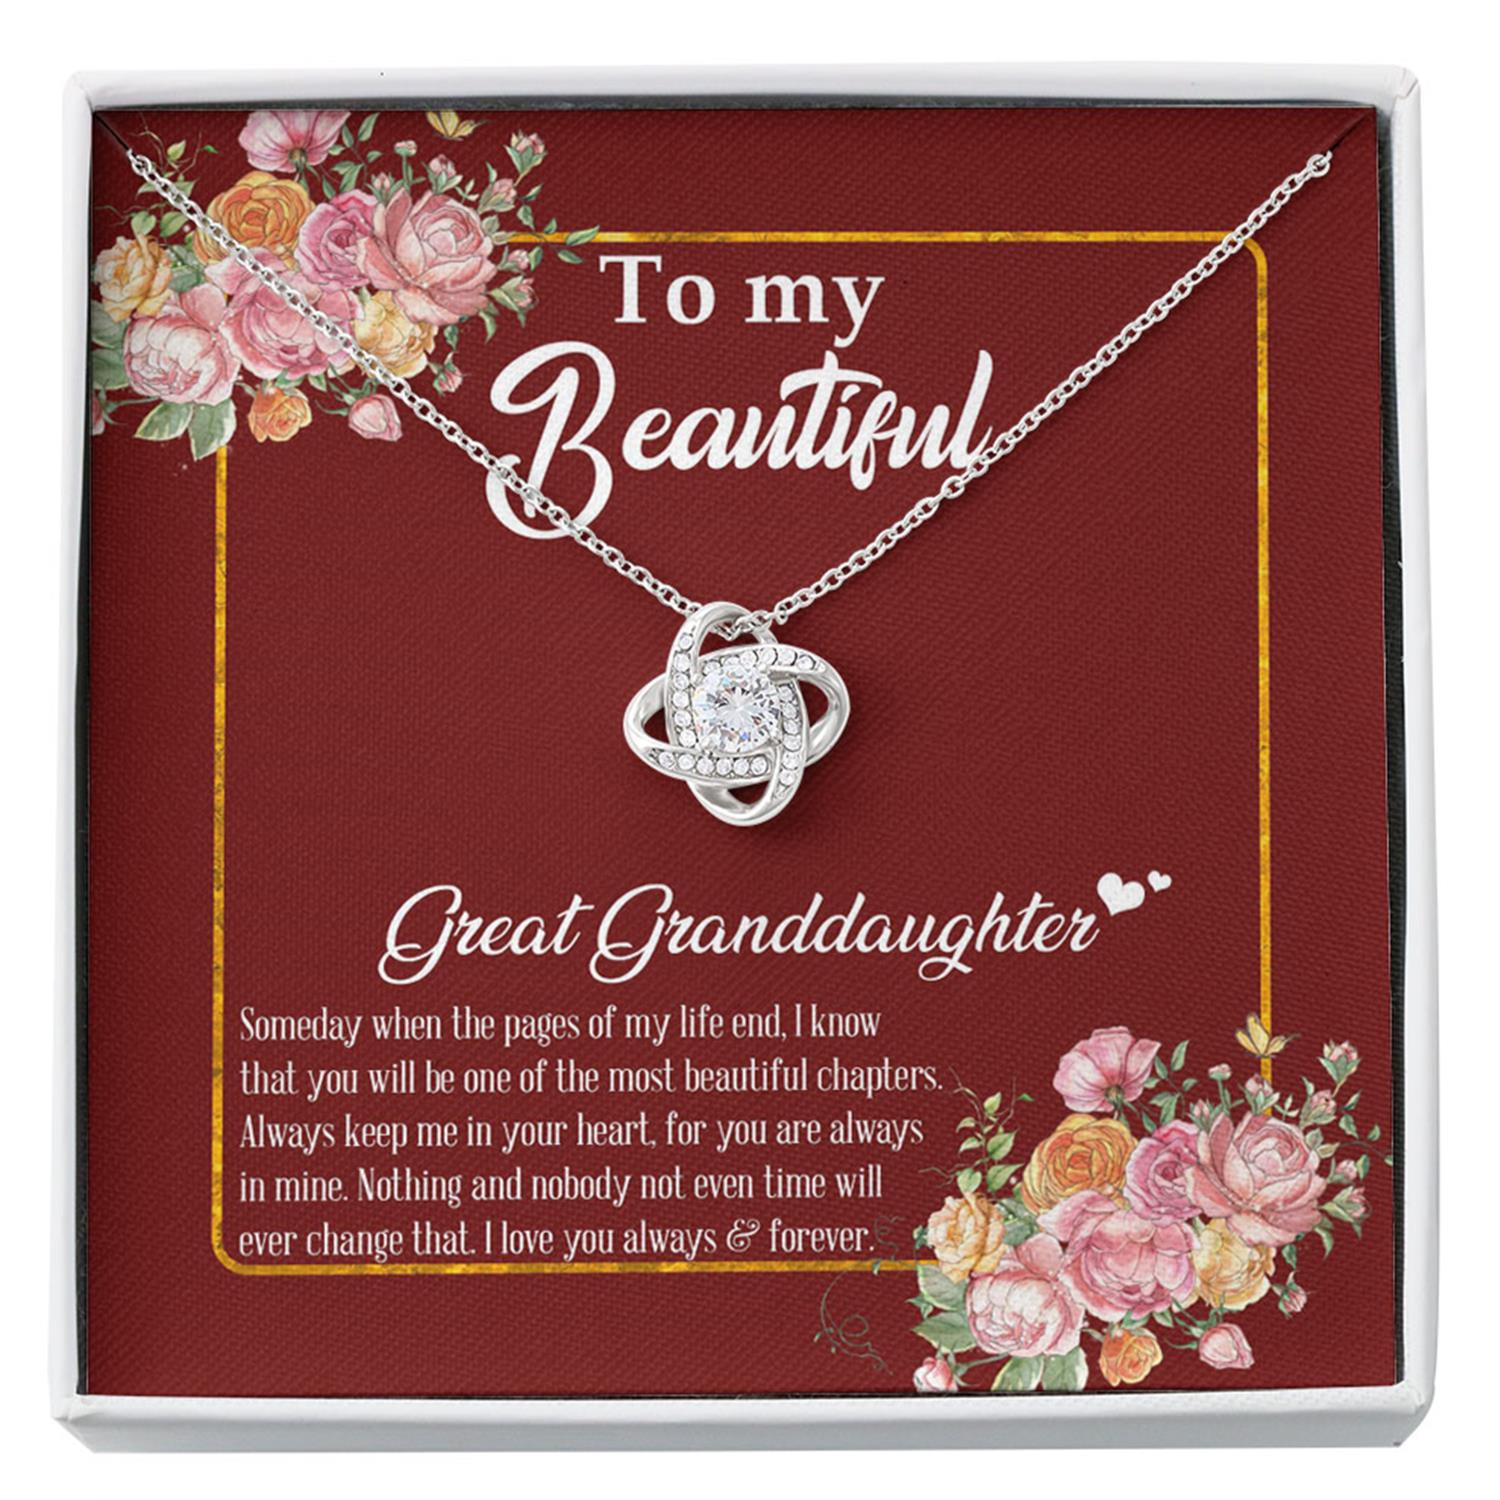 Granddaughter Necklace, Great Granddaughter Necklace Gift, Great Granddaughter Christmas Necklace, Great Granddaughter Custom Necklace